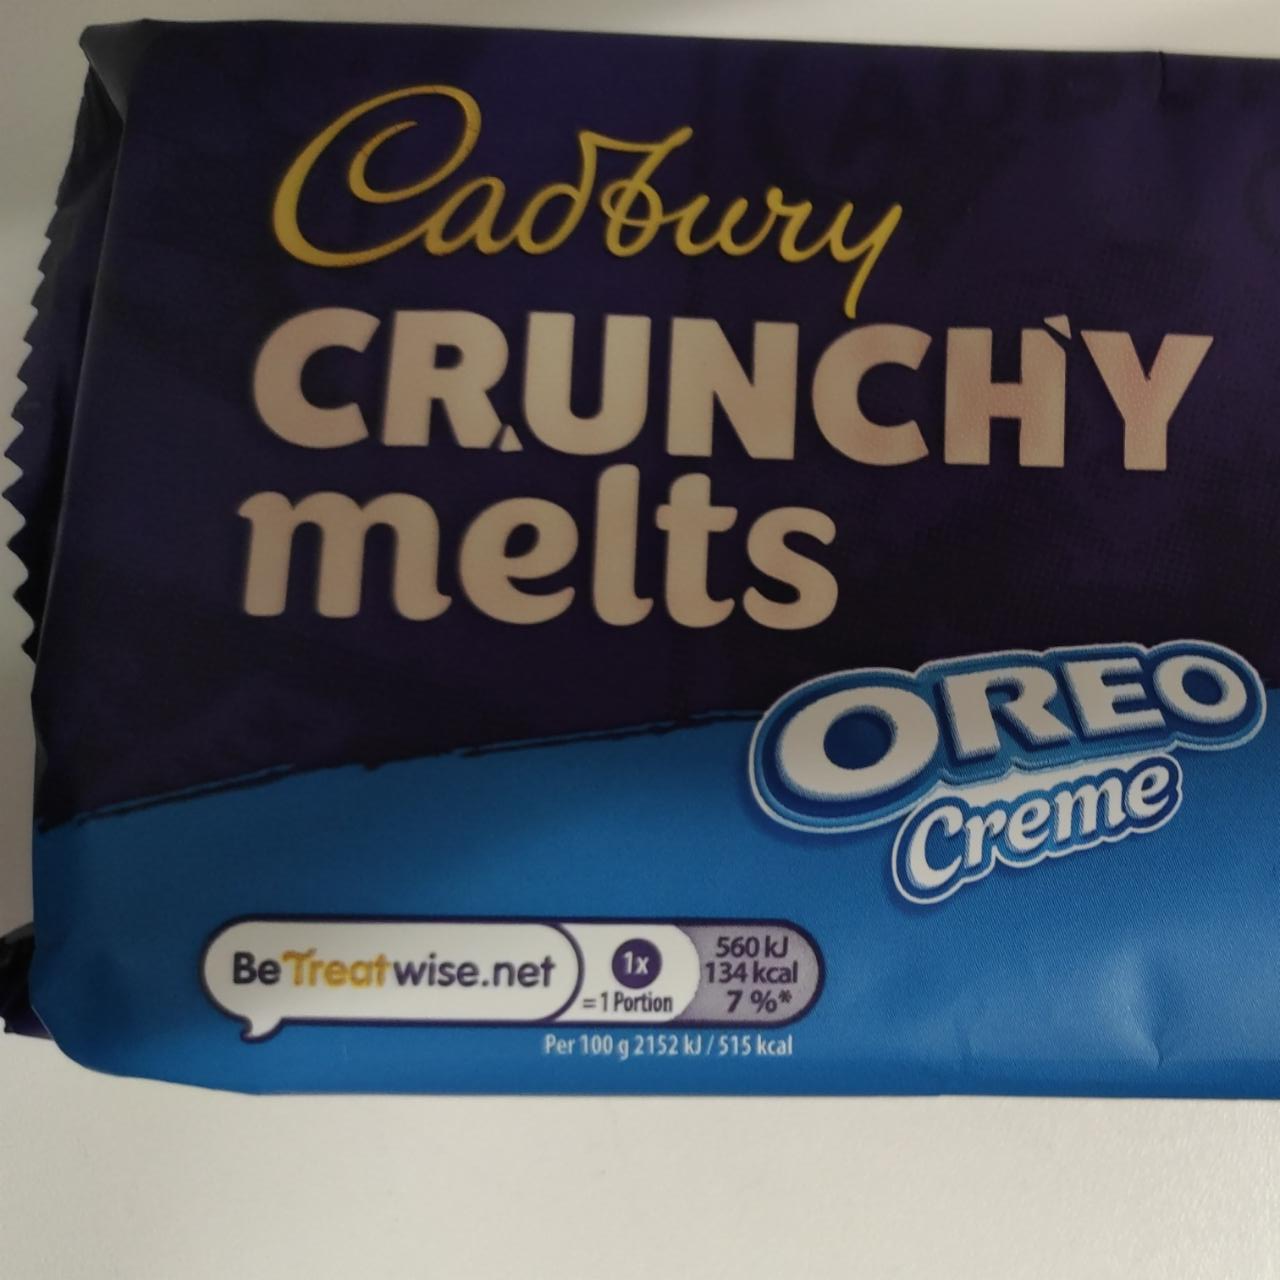 Fotografie - Crunchy melts Oreo Creme Cadbury